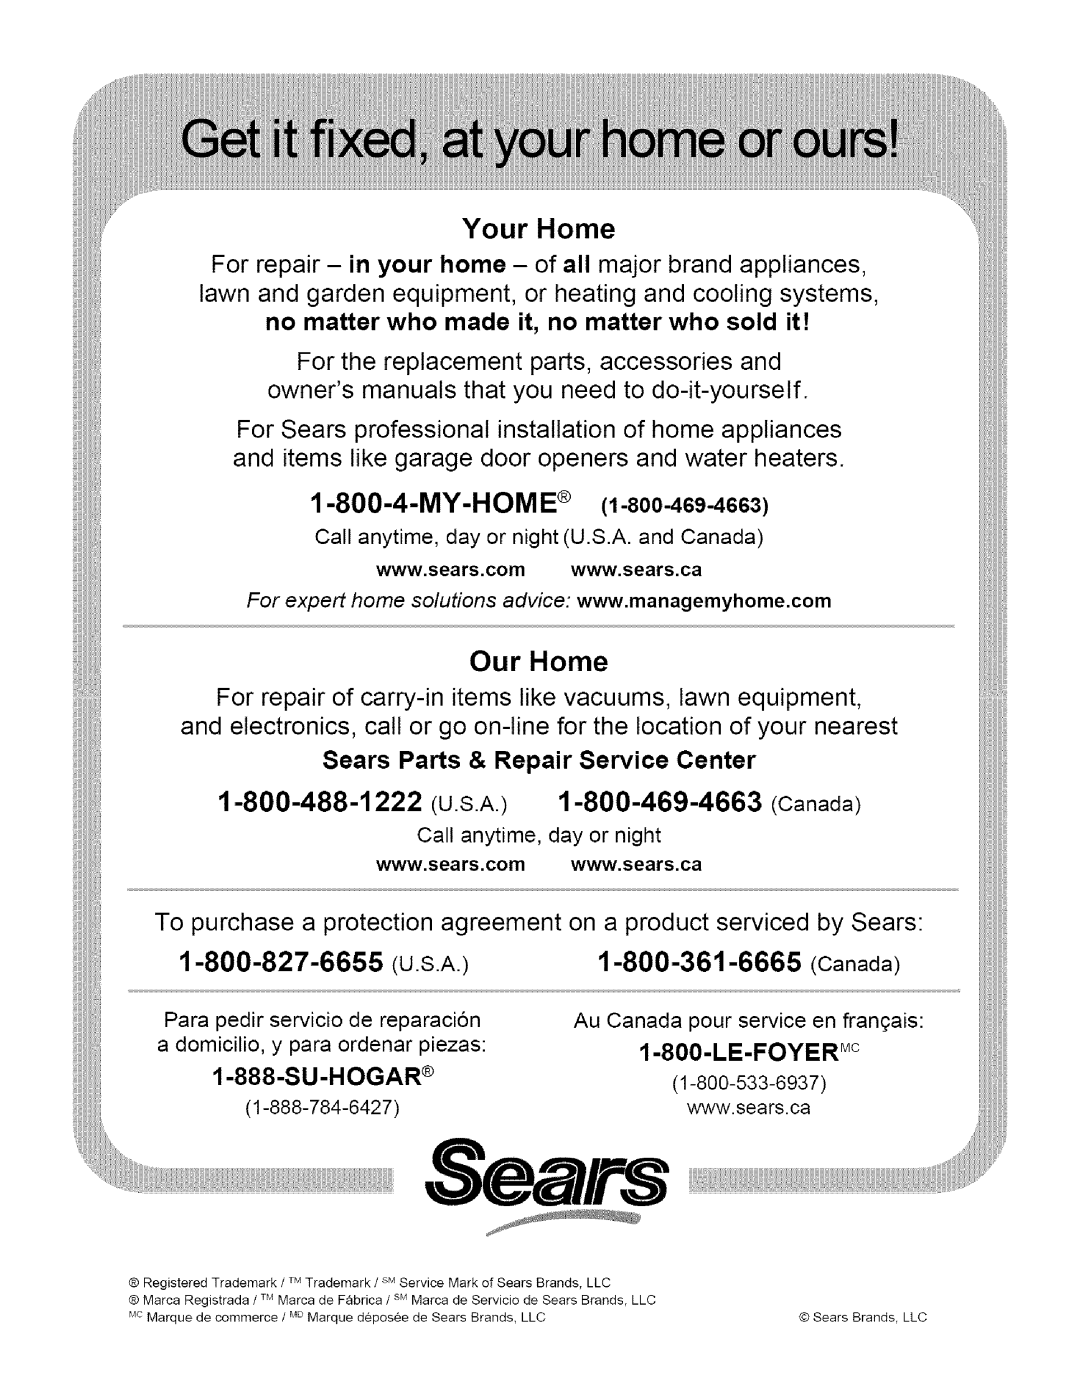 Craftsman 486.248473 manual Your Home, Our Home, U.S.A, Canada, Sears Parts & Repair Service Center, Su-Hogar 